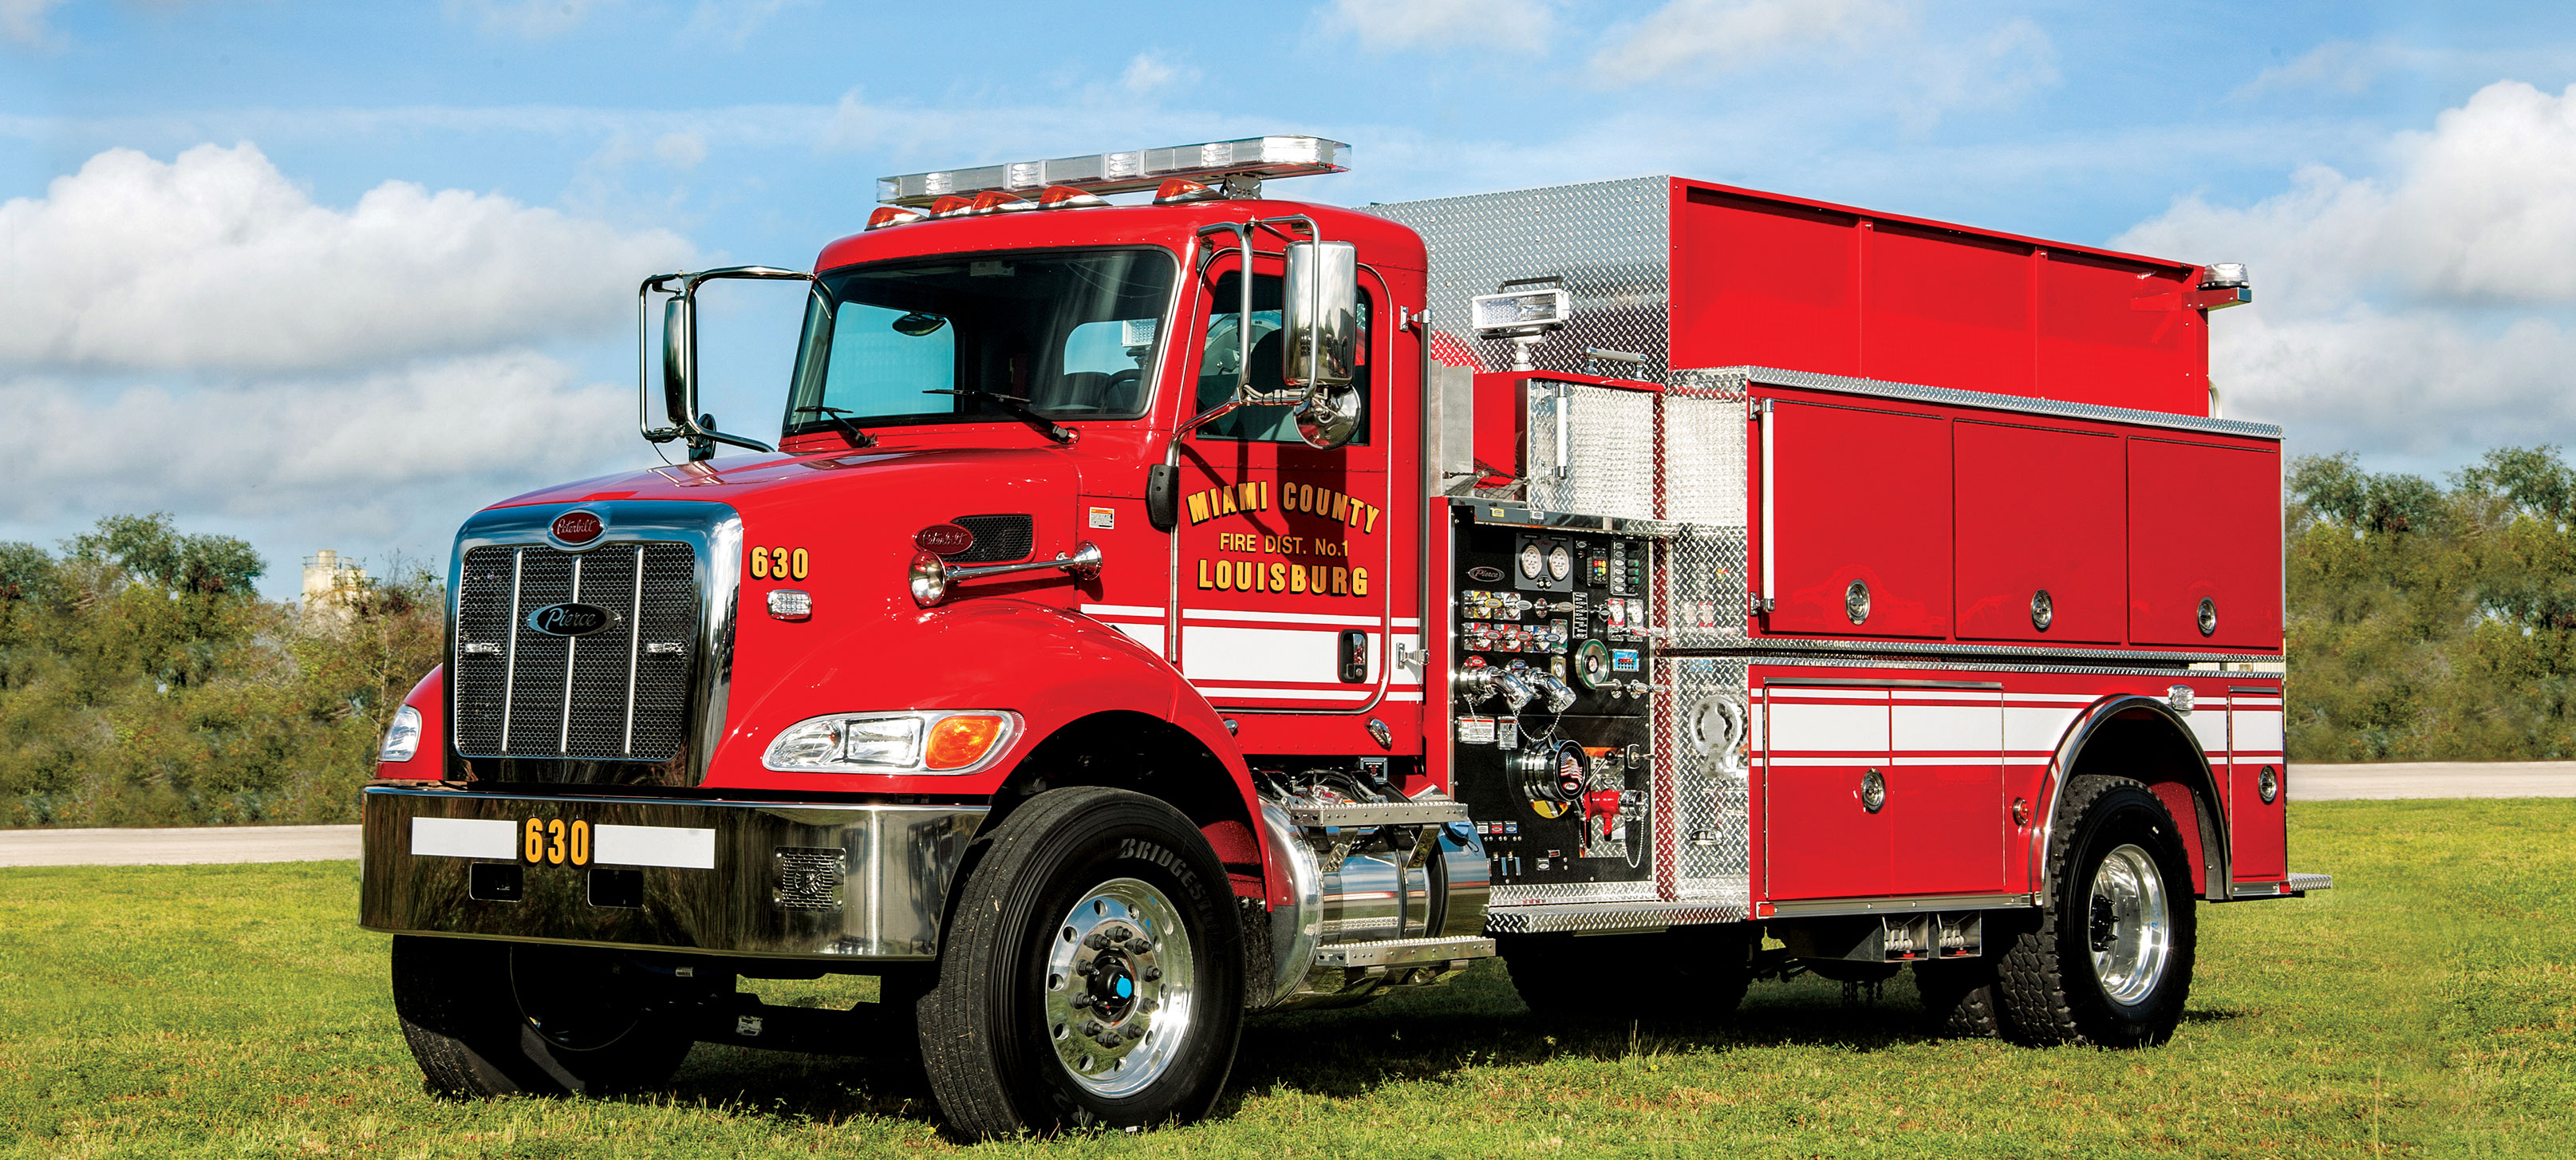 Pierce Peterbilt Commercial Fire Truck Chassis